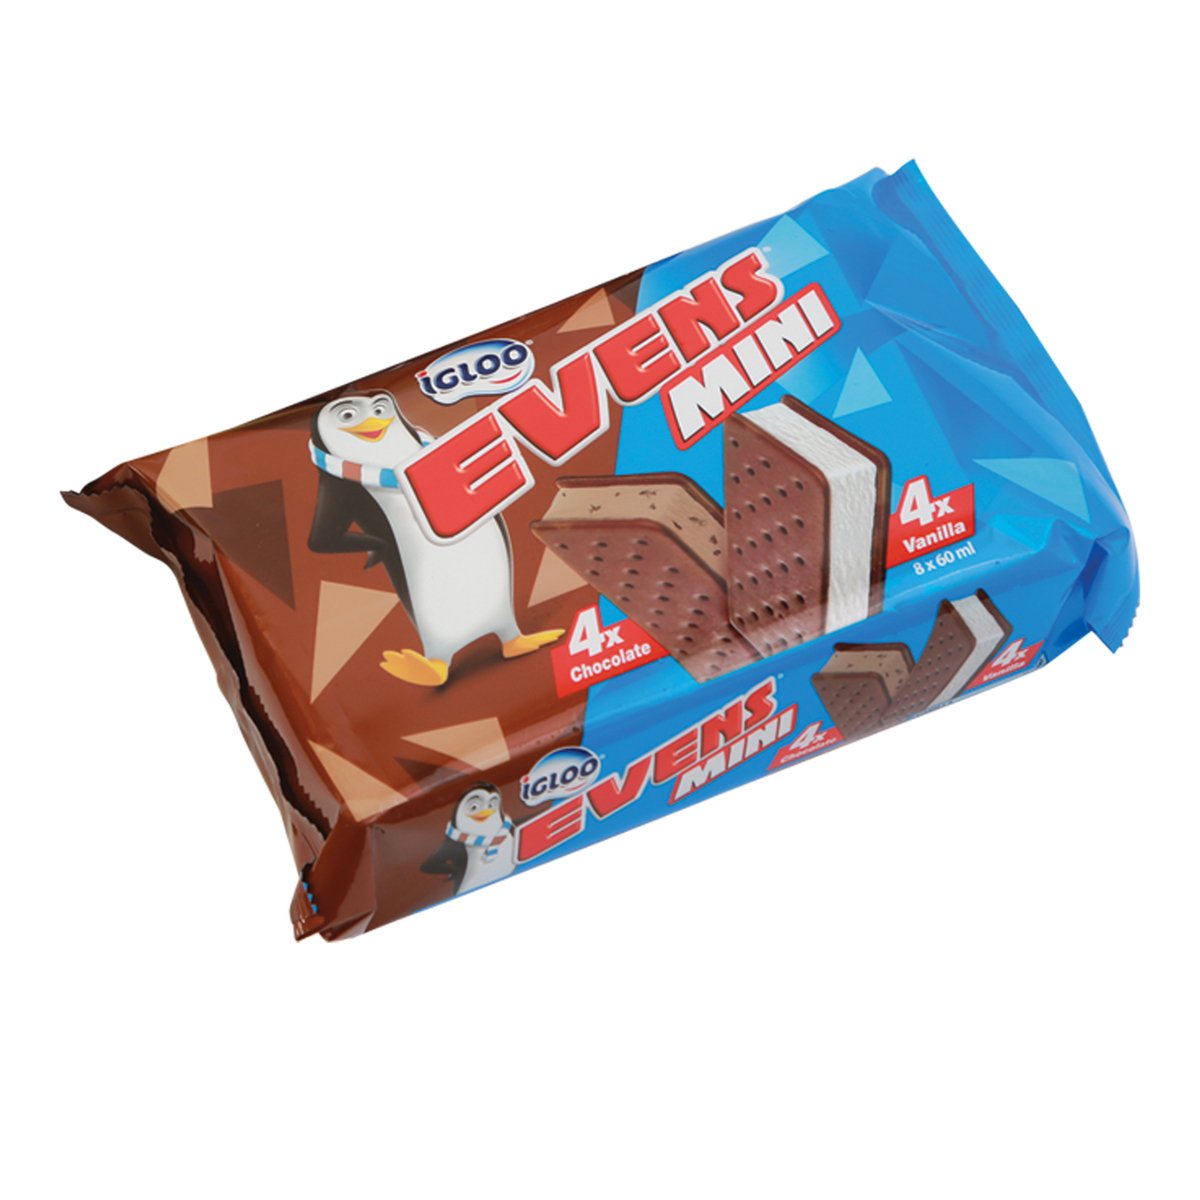 Igloo Evens Mini Chocolate 4 x 60ml + Vanilla 4 x 60ml